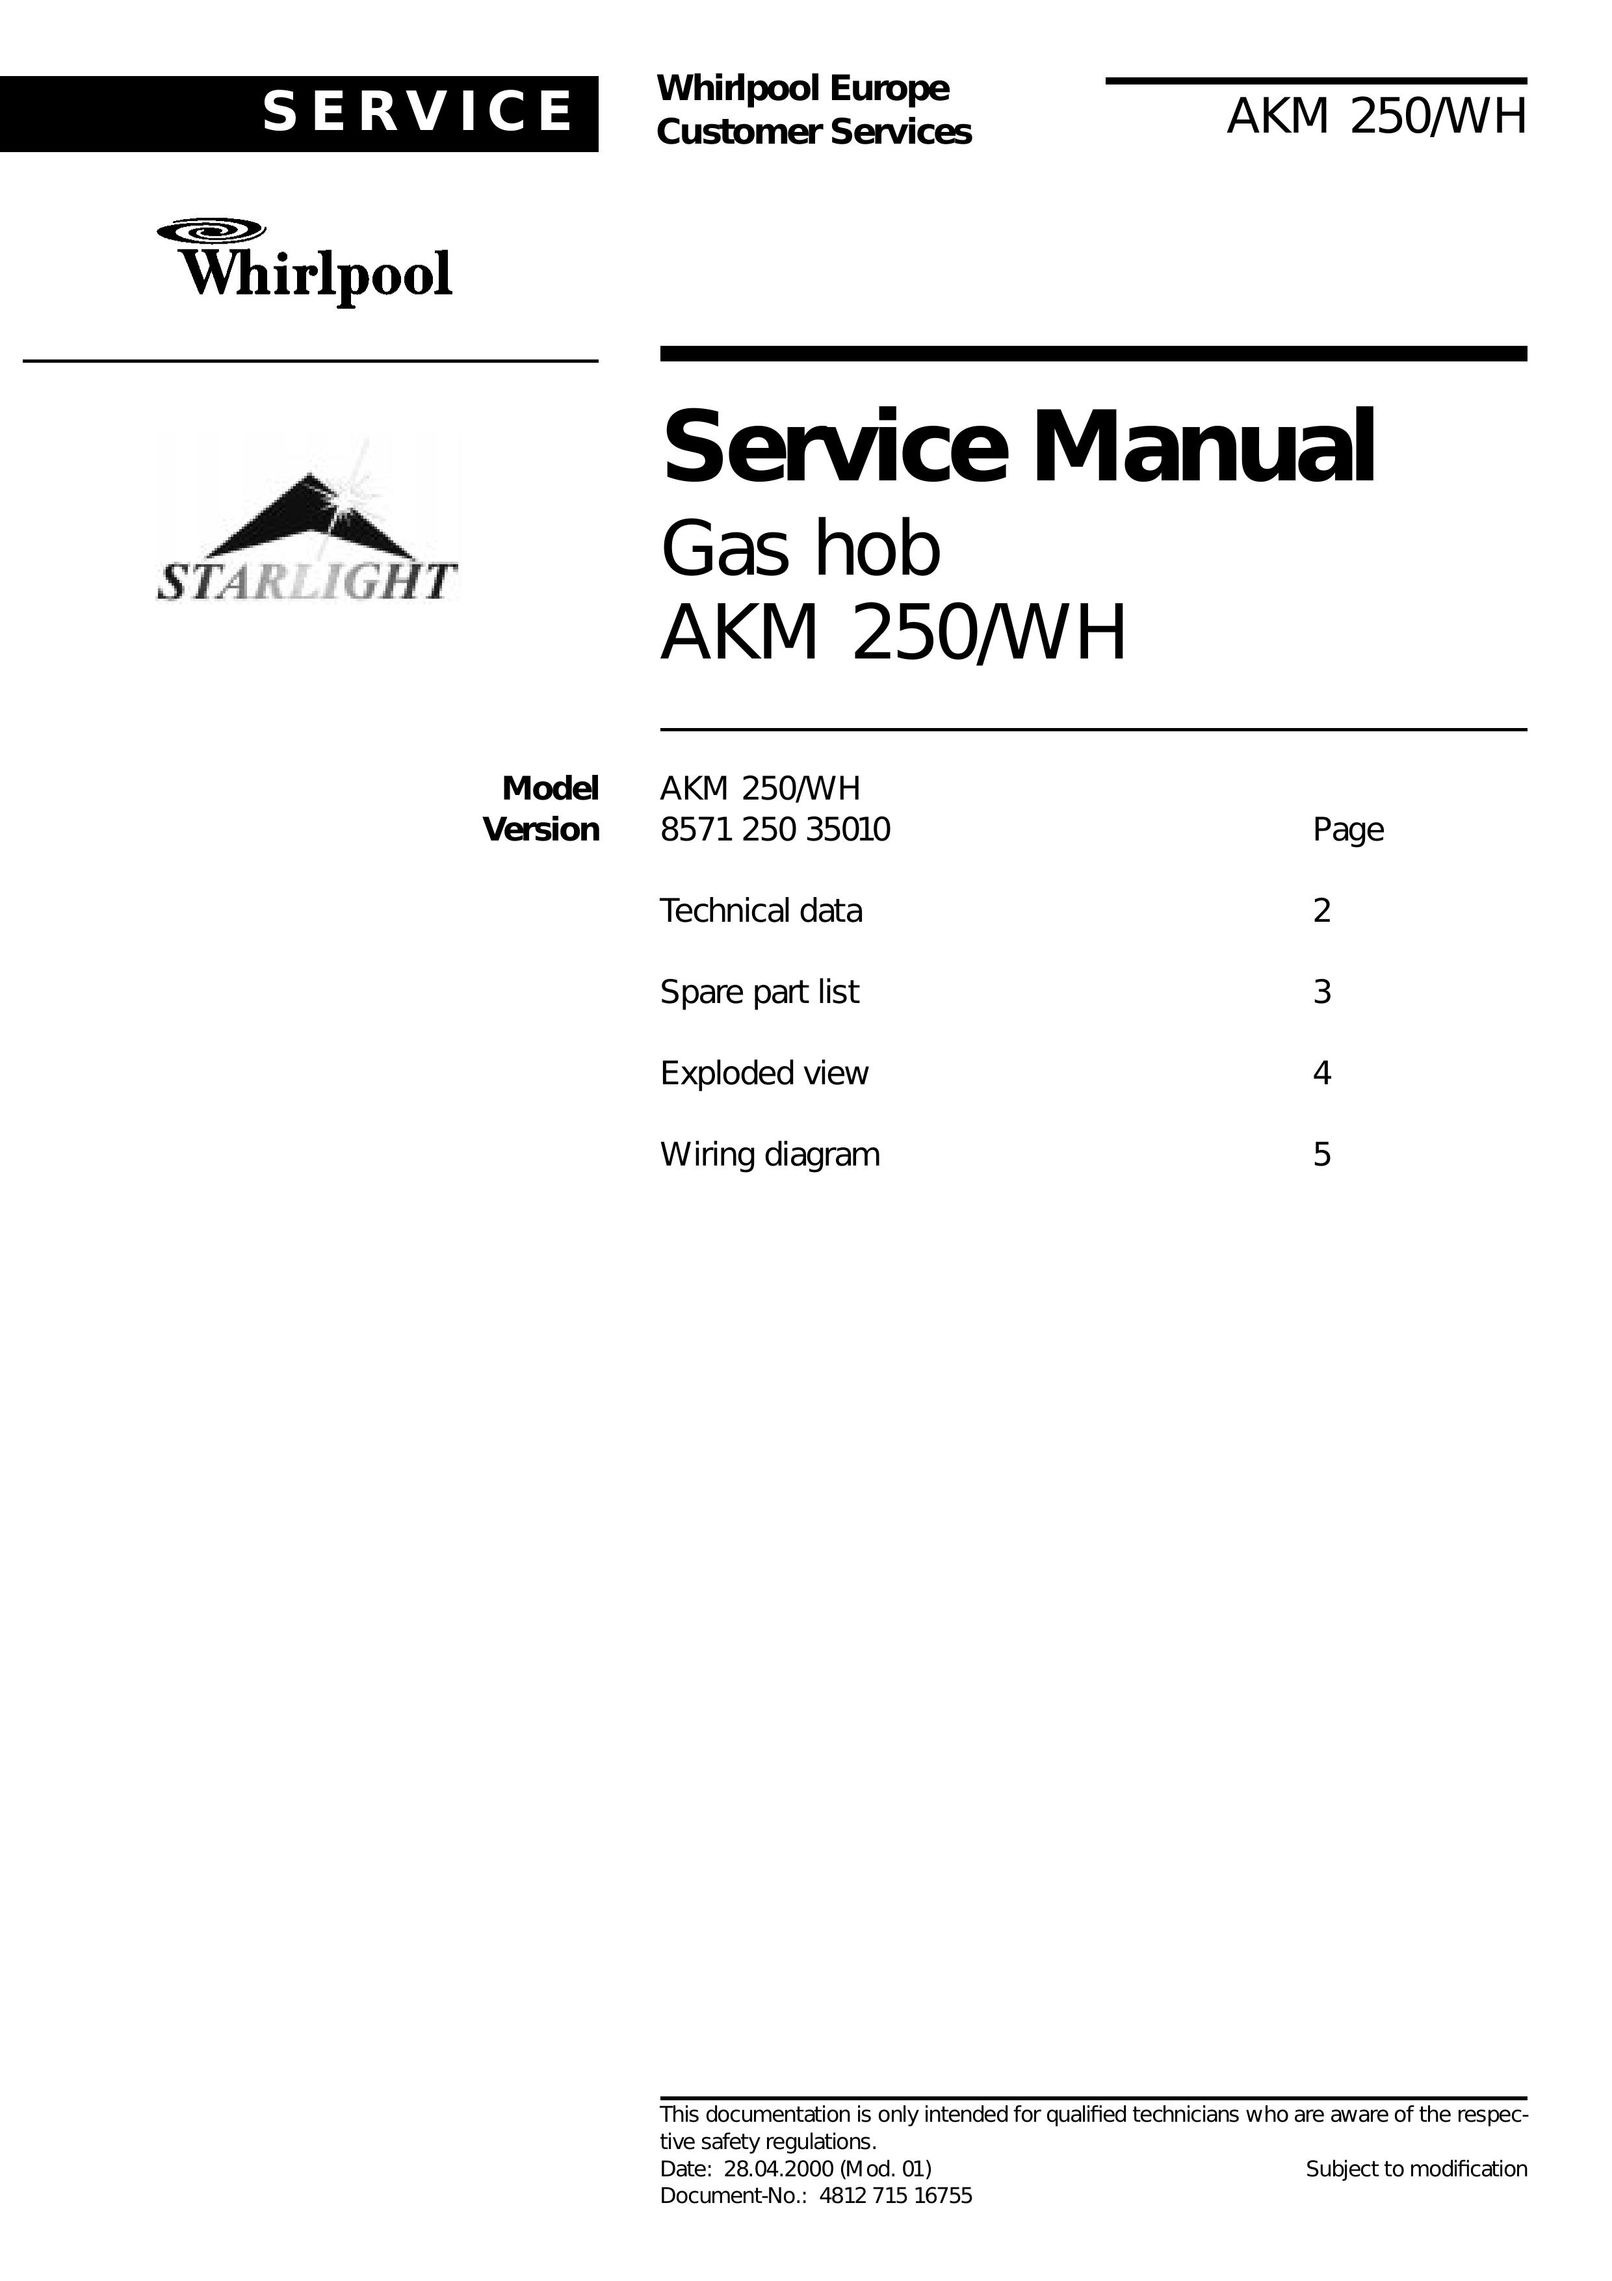 Whirlpool AKM Furnace User Manual